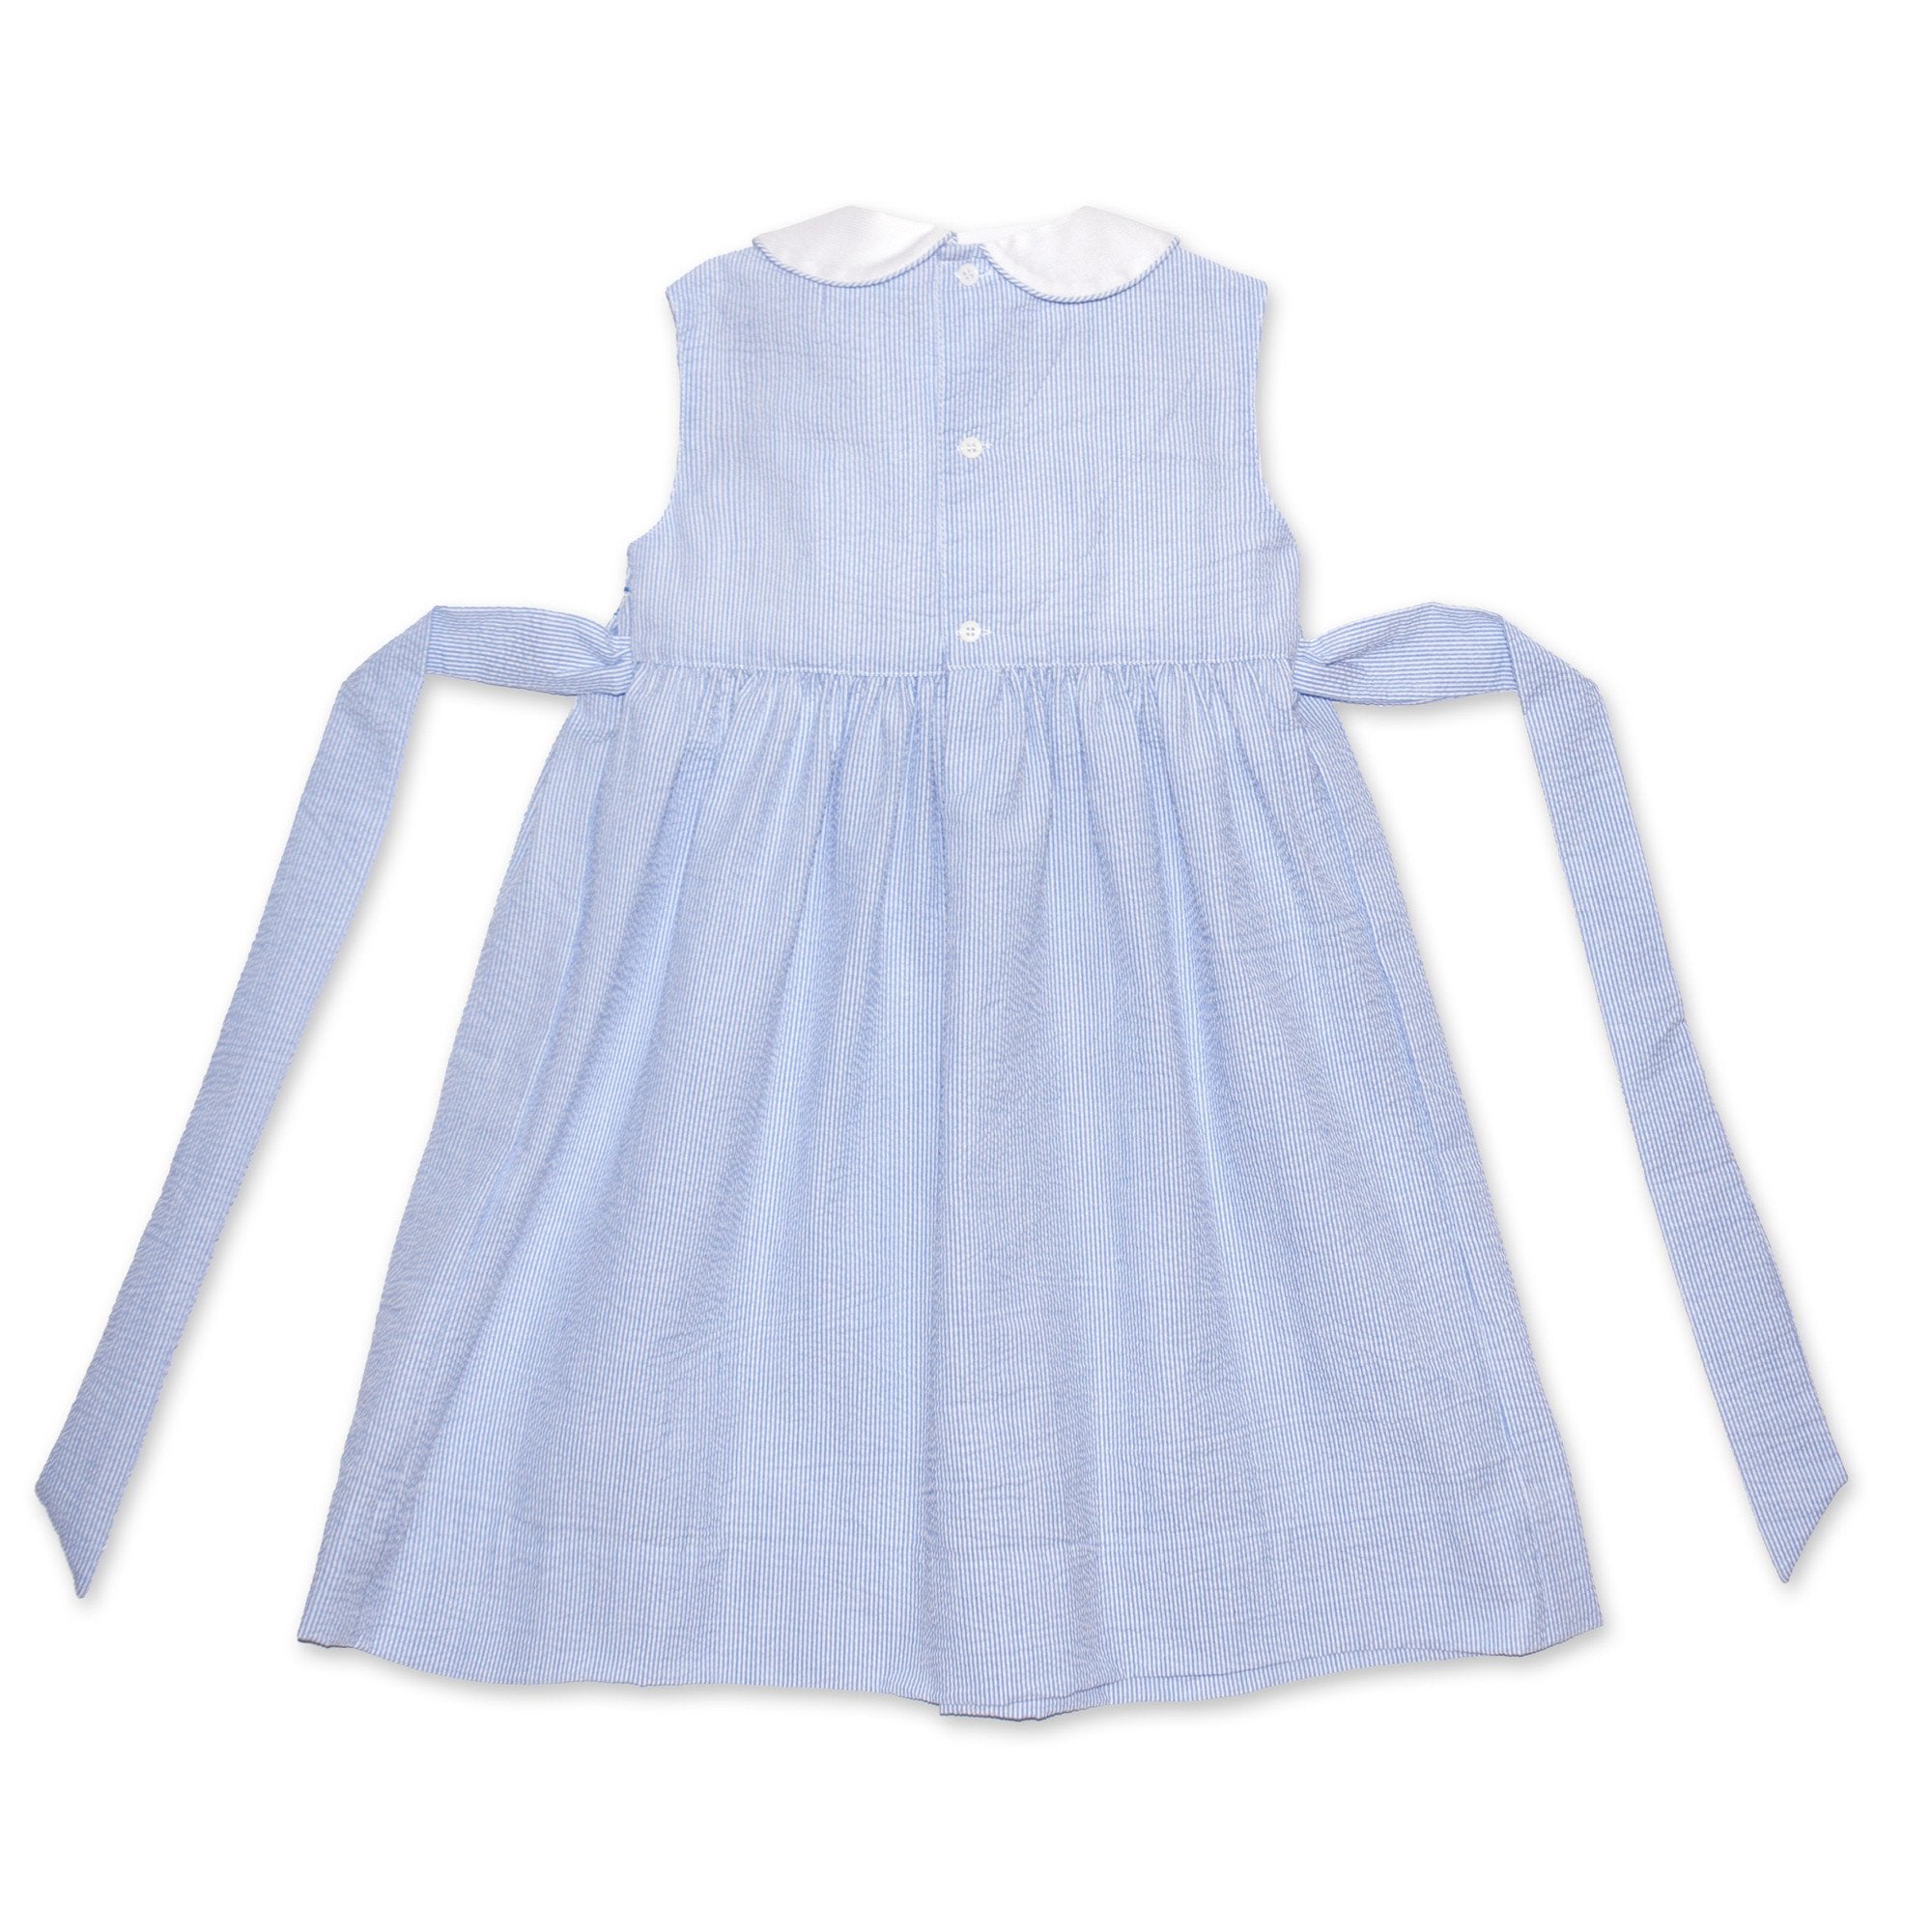 Bella Pale Blue And White Pin Stripe Smock Dress - Cou Cou Baby